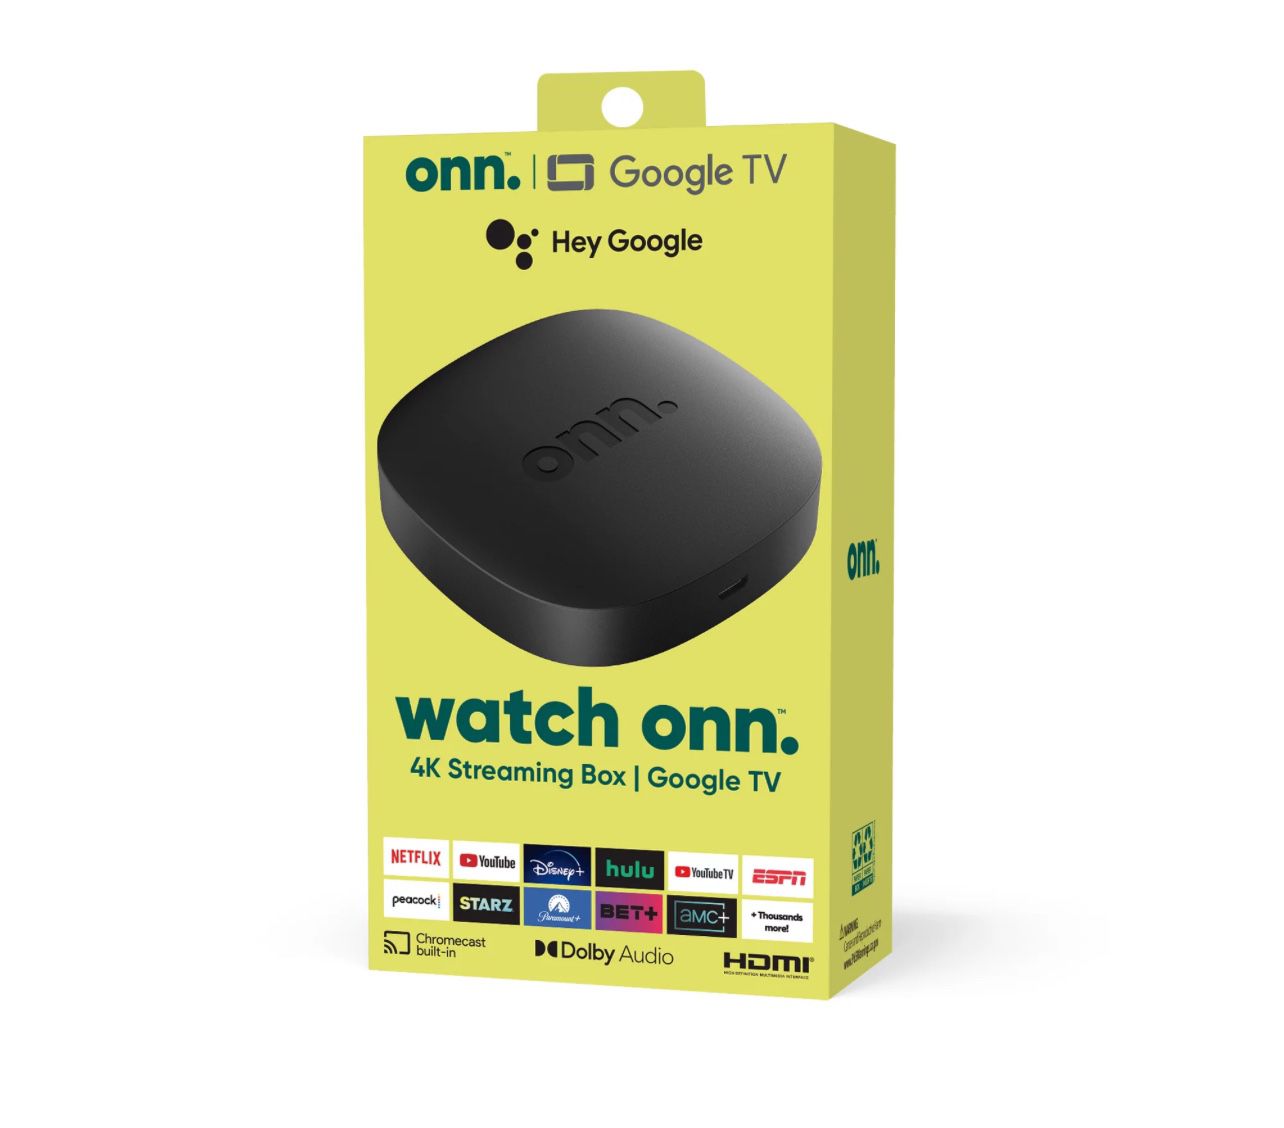 onn. Google TV 4K Streaming Box Chromecast Netflix Certified Bluetooth